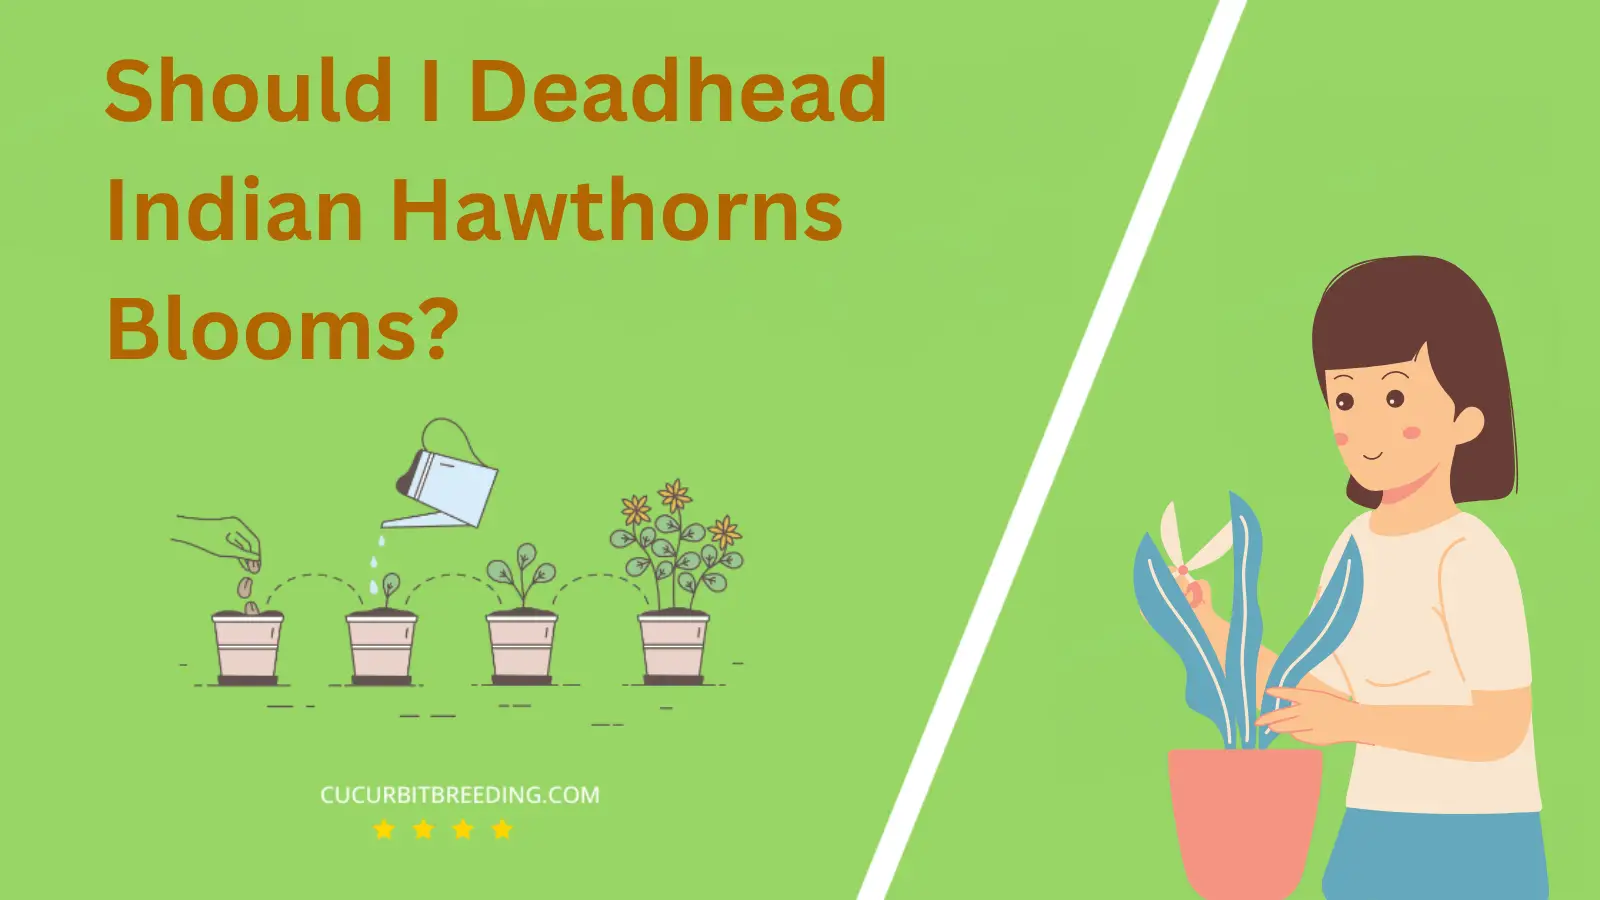 Should I Deadhead Indian Hawthorns Blooms?